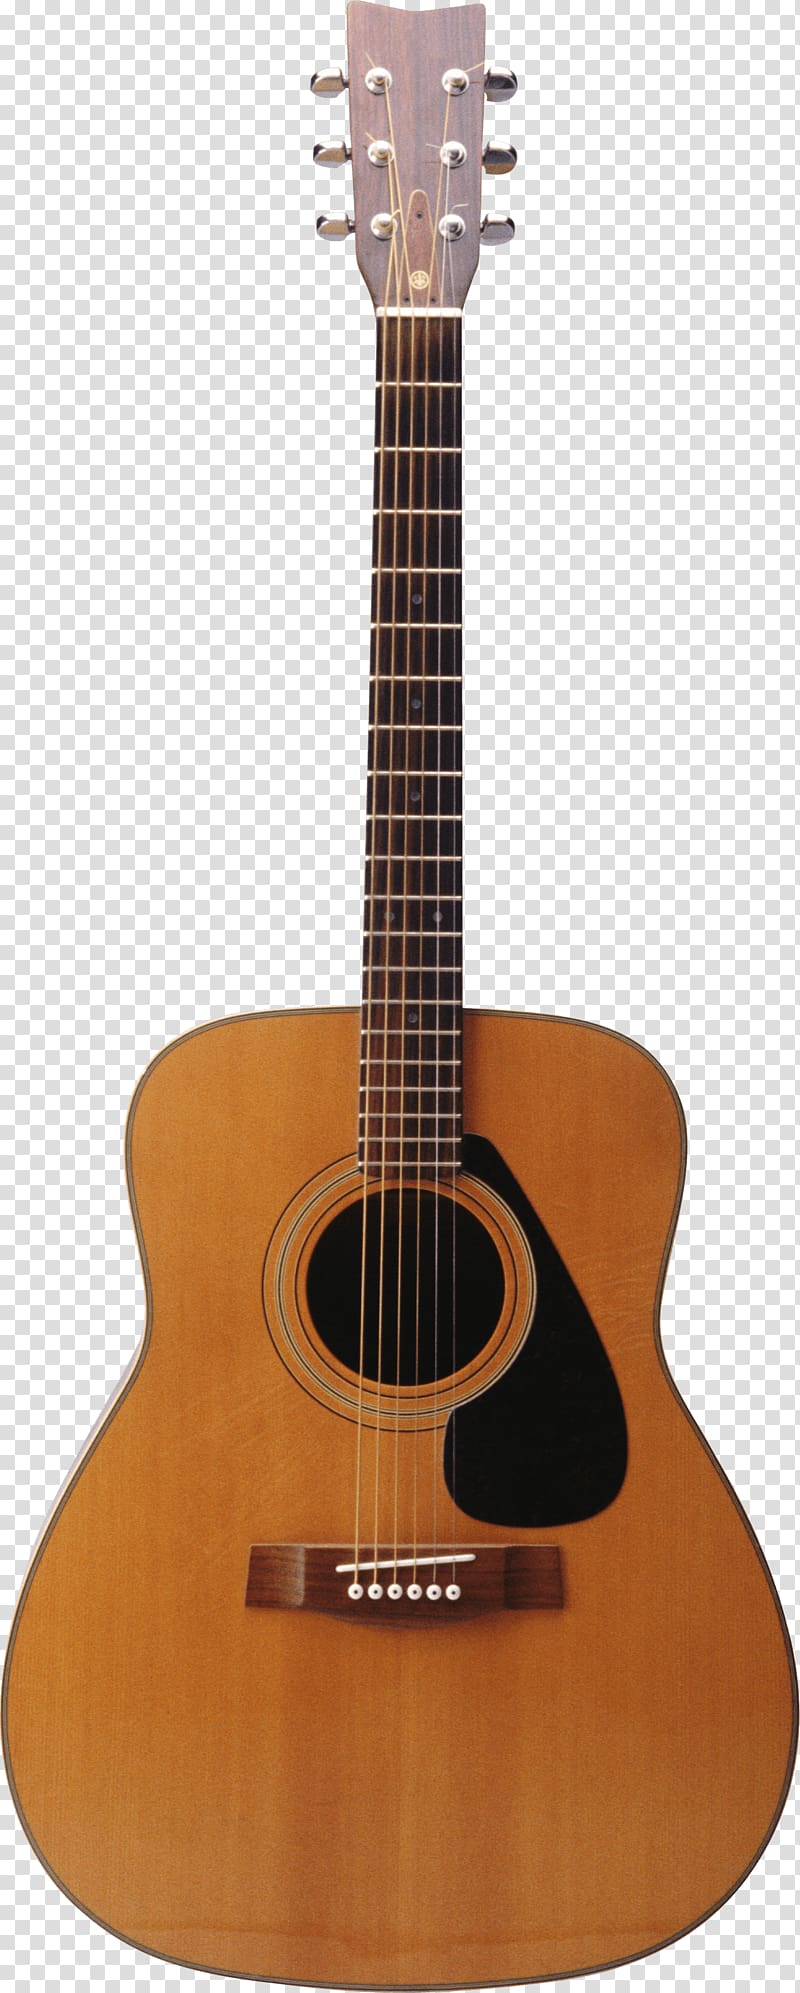 Ukulele Classical guitar Acoustic guitar Acoustic-electric guitar, Guitar transparent background PNG clipart